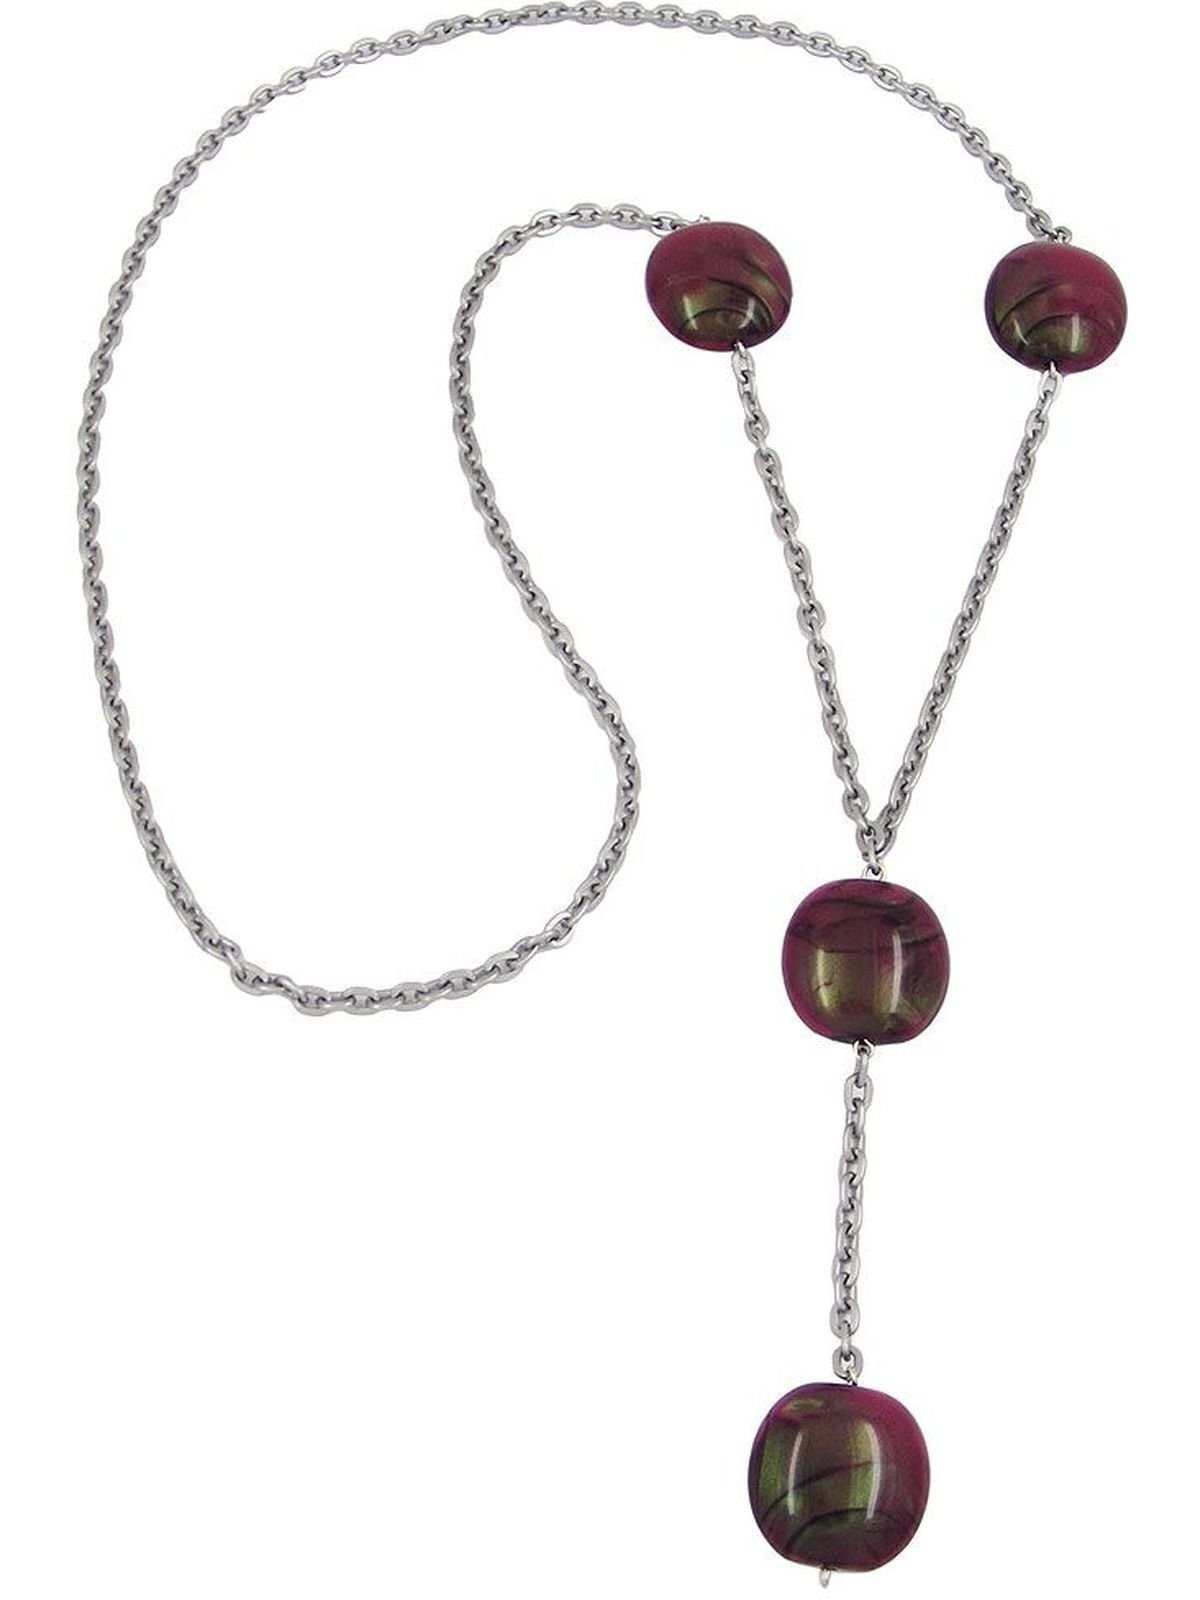 Gallay Perlenkette Kunststoffperlen Nugget grau Eloxal Ankerkette 100cm pflaume-seide-matt